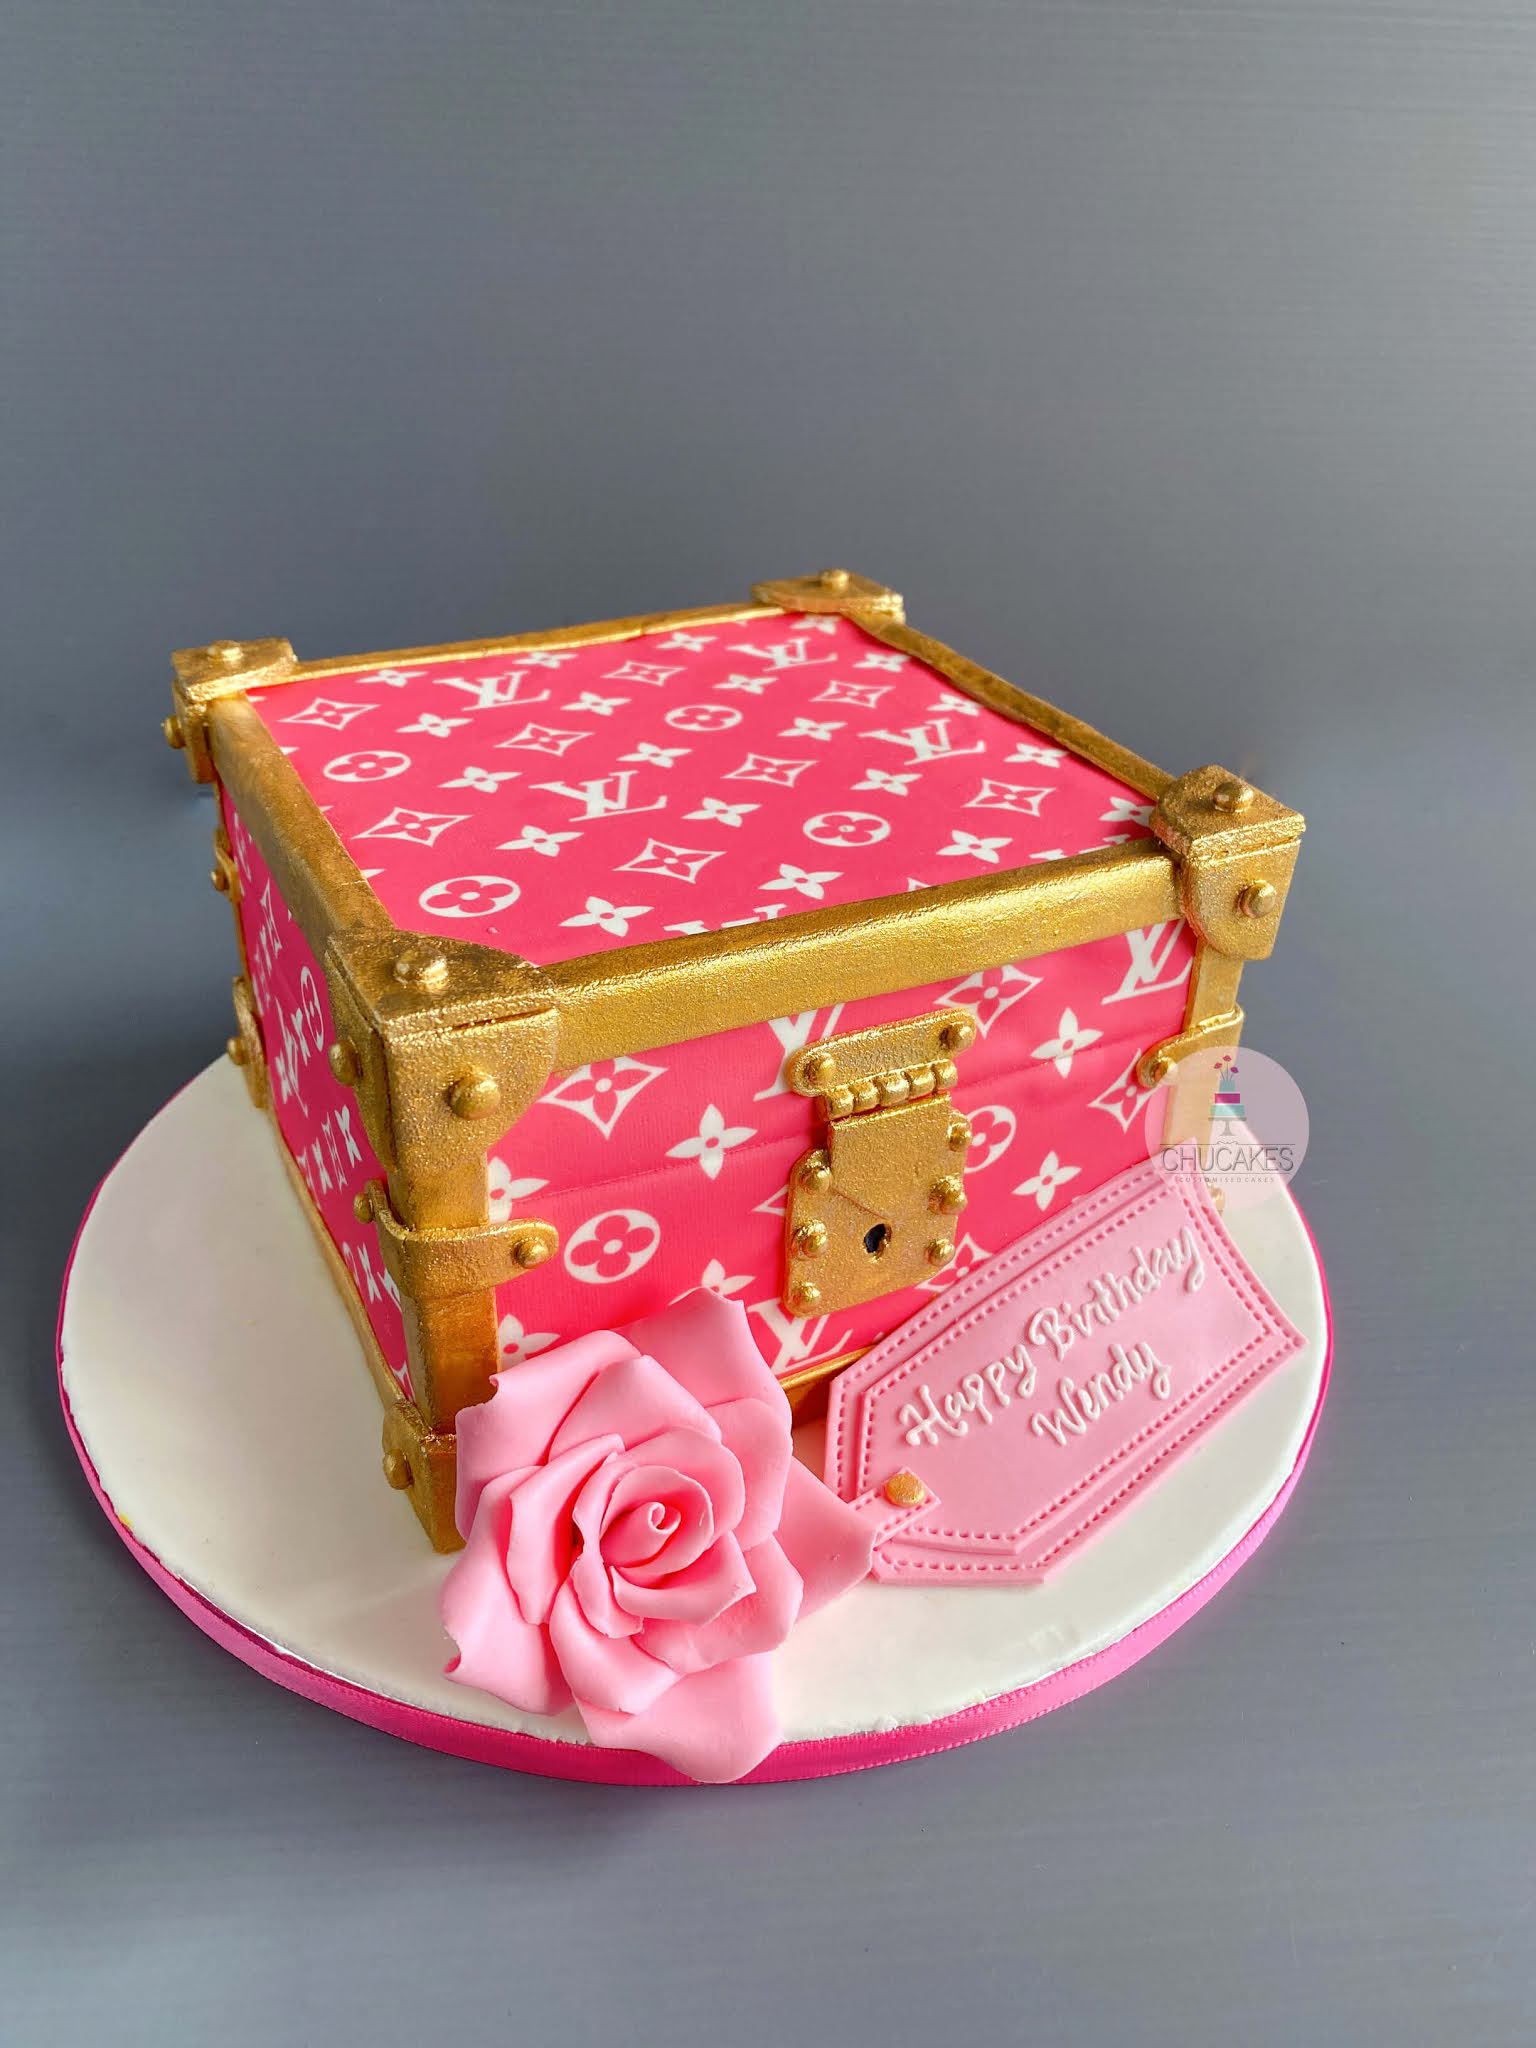 CHUCAKES : Pink LV Cake with Ribbon